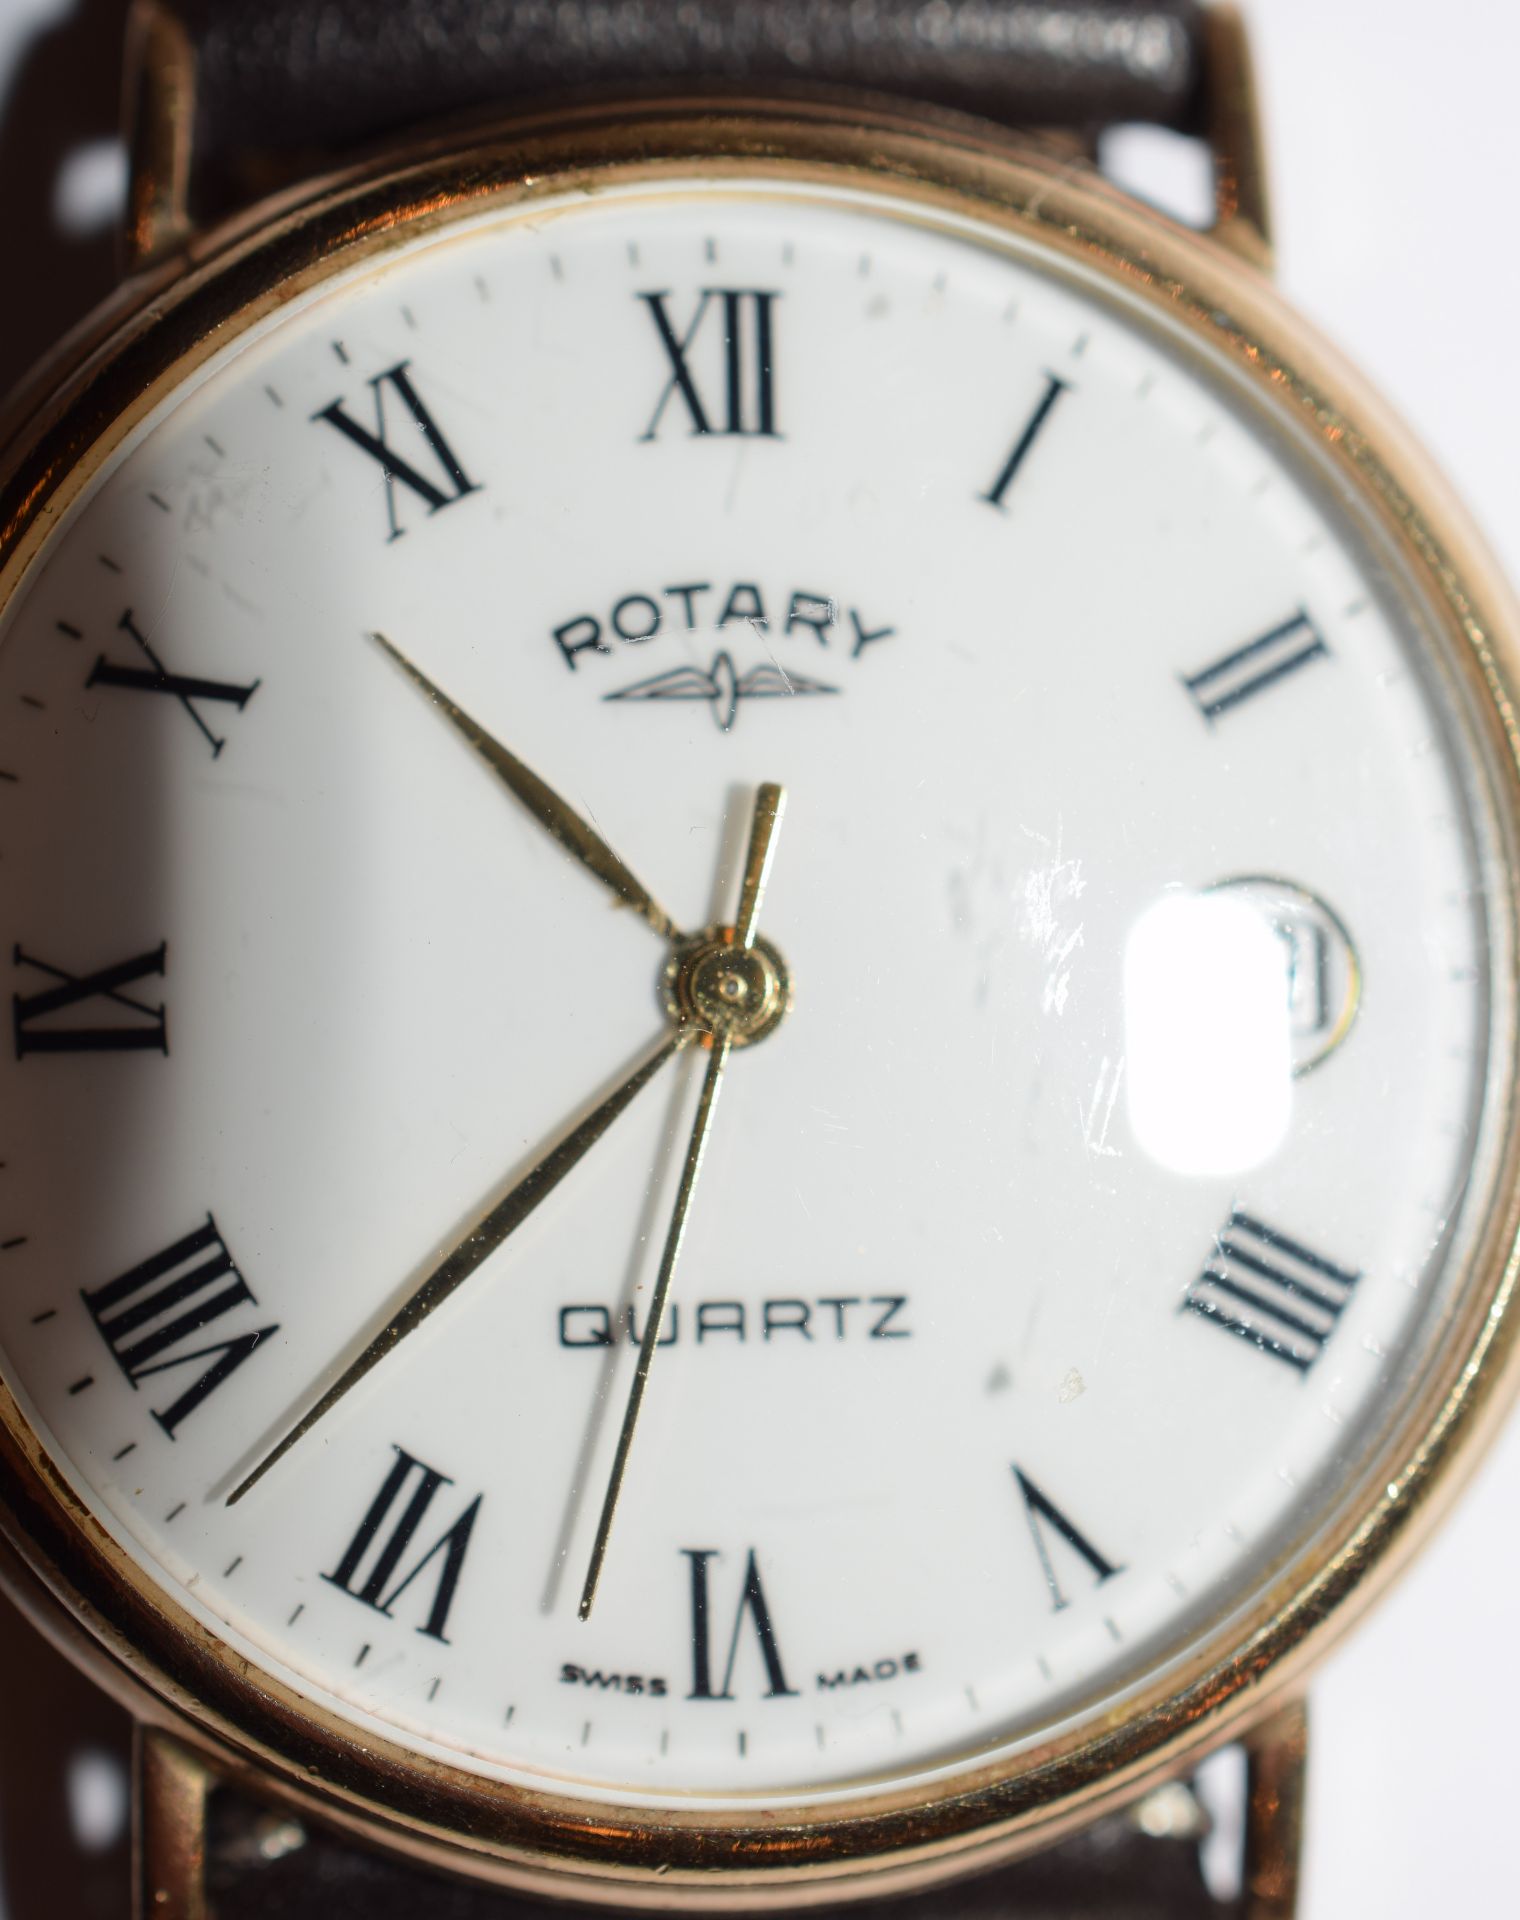 Rotary 9ct Gold Quartz Watch - Image 4 of 5